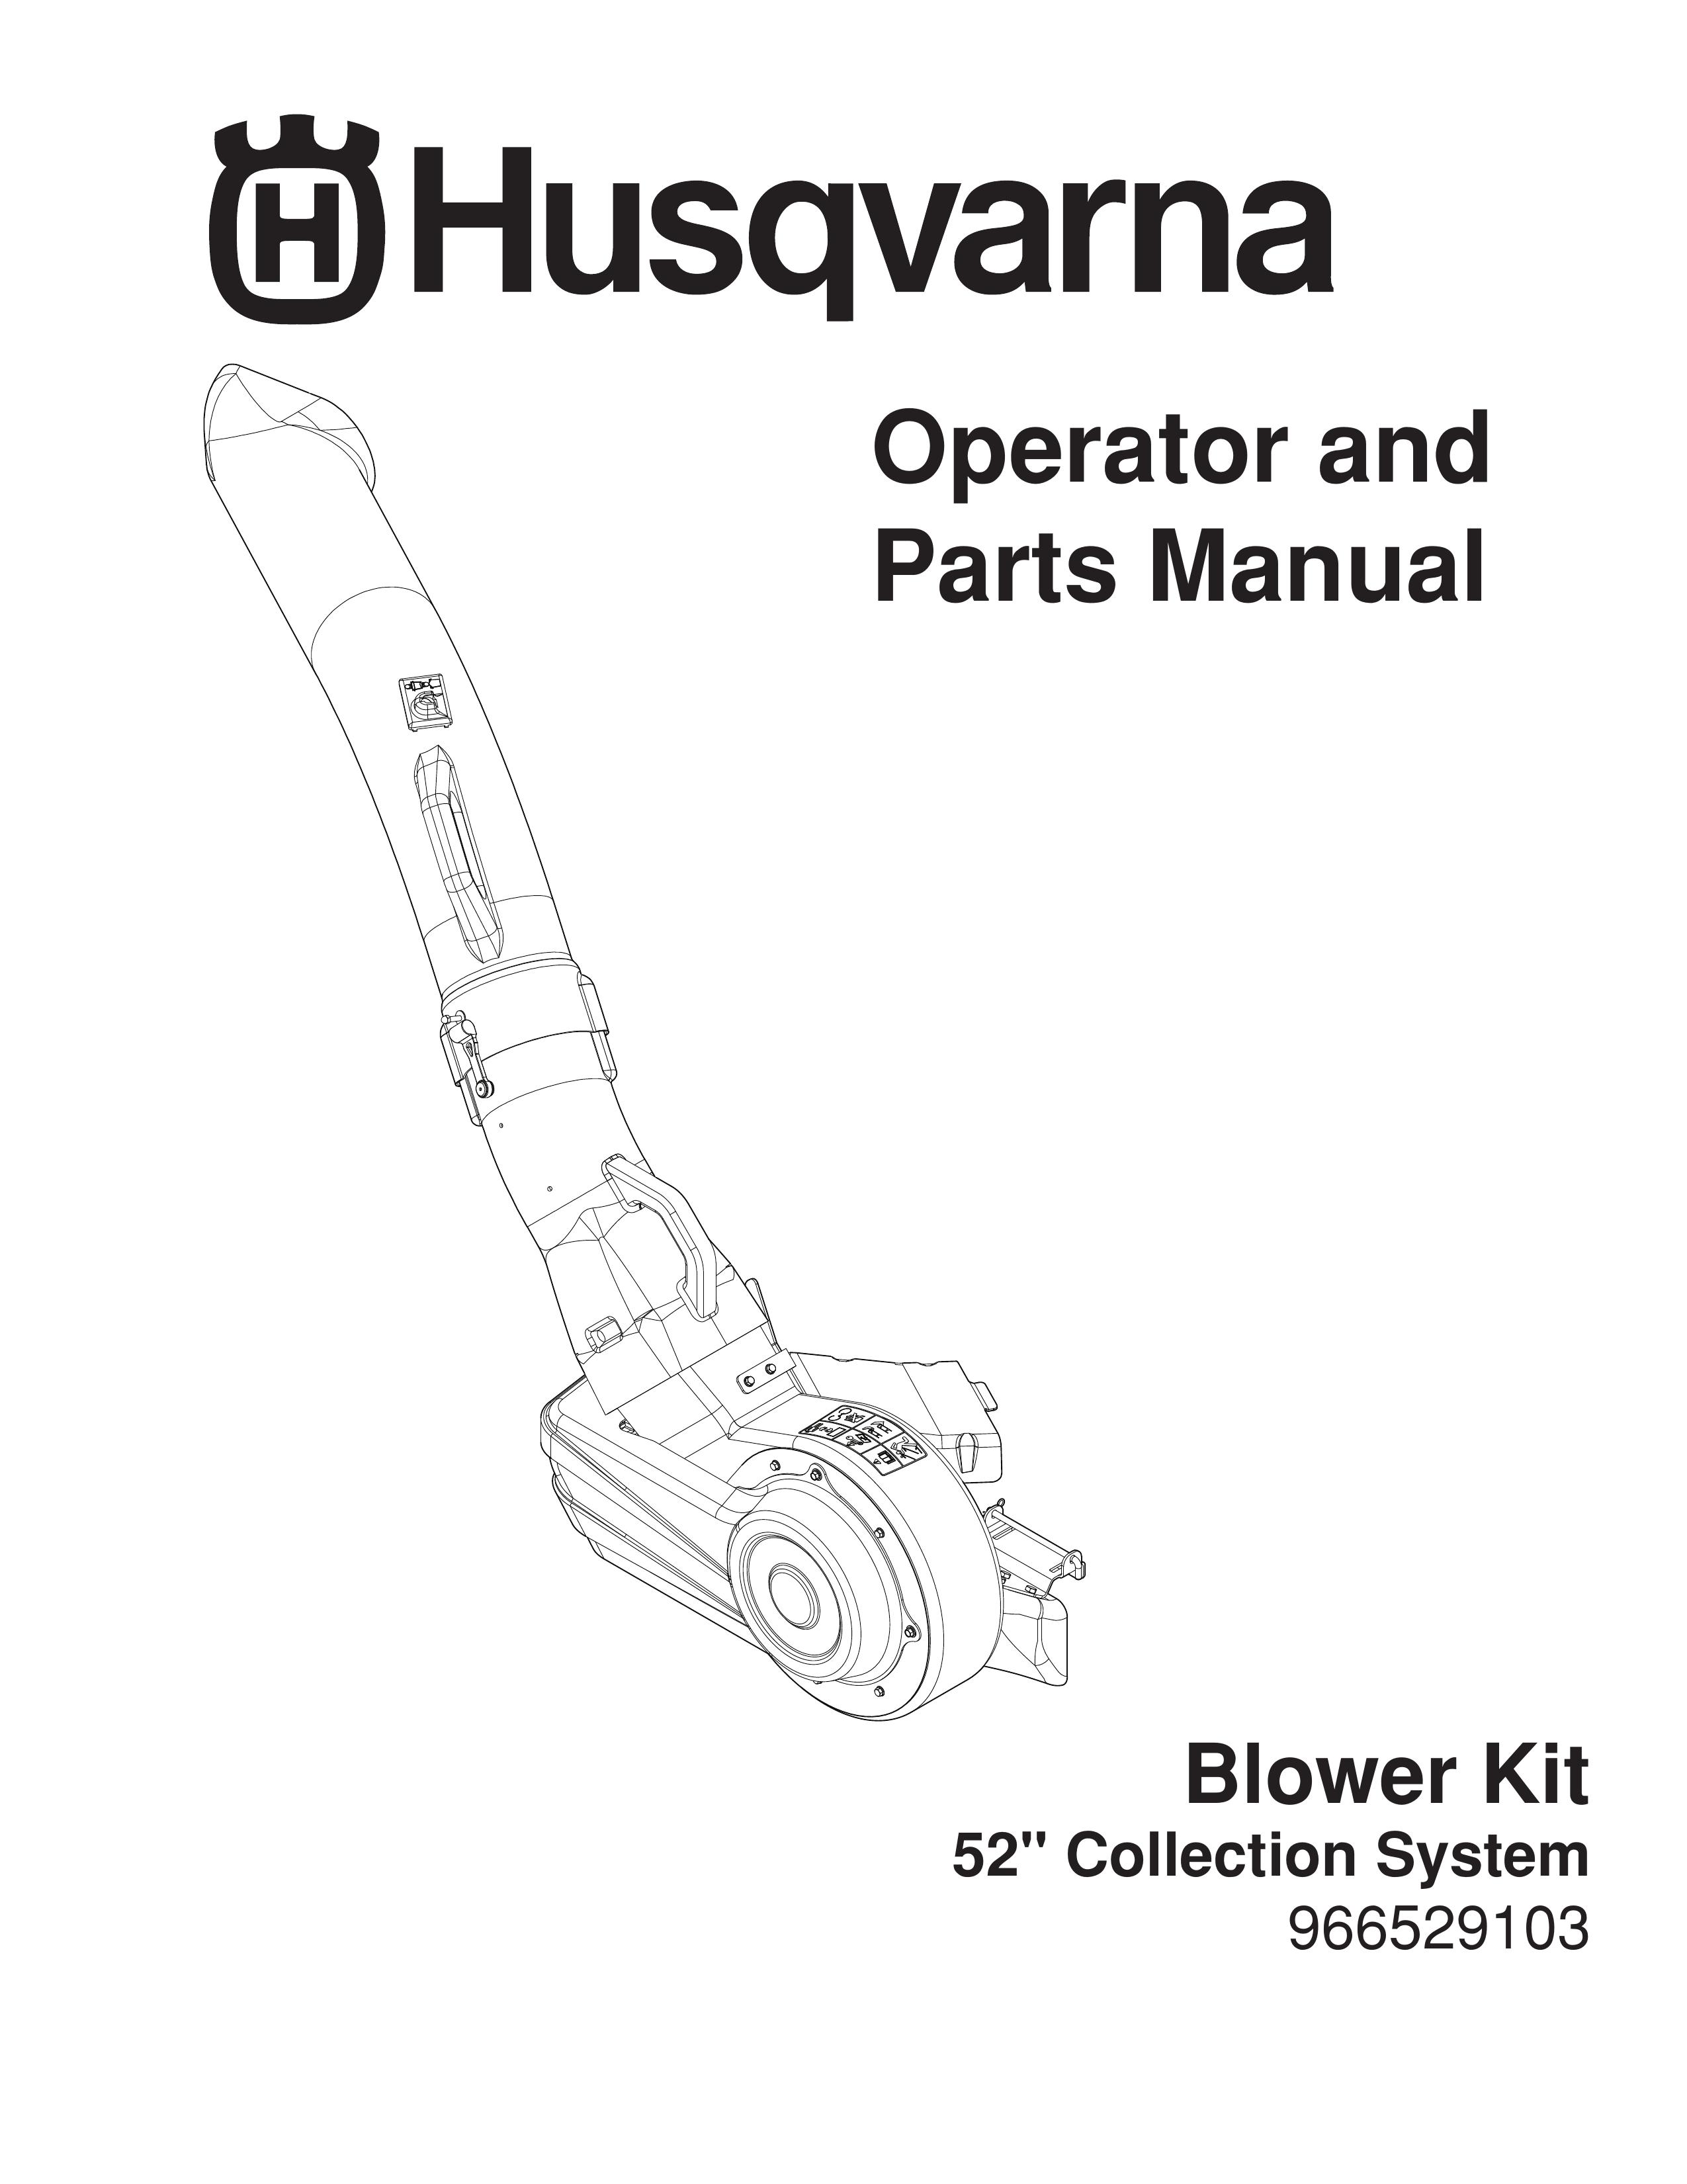 Husqvarna 966529103 Blower User Manual